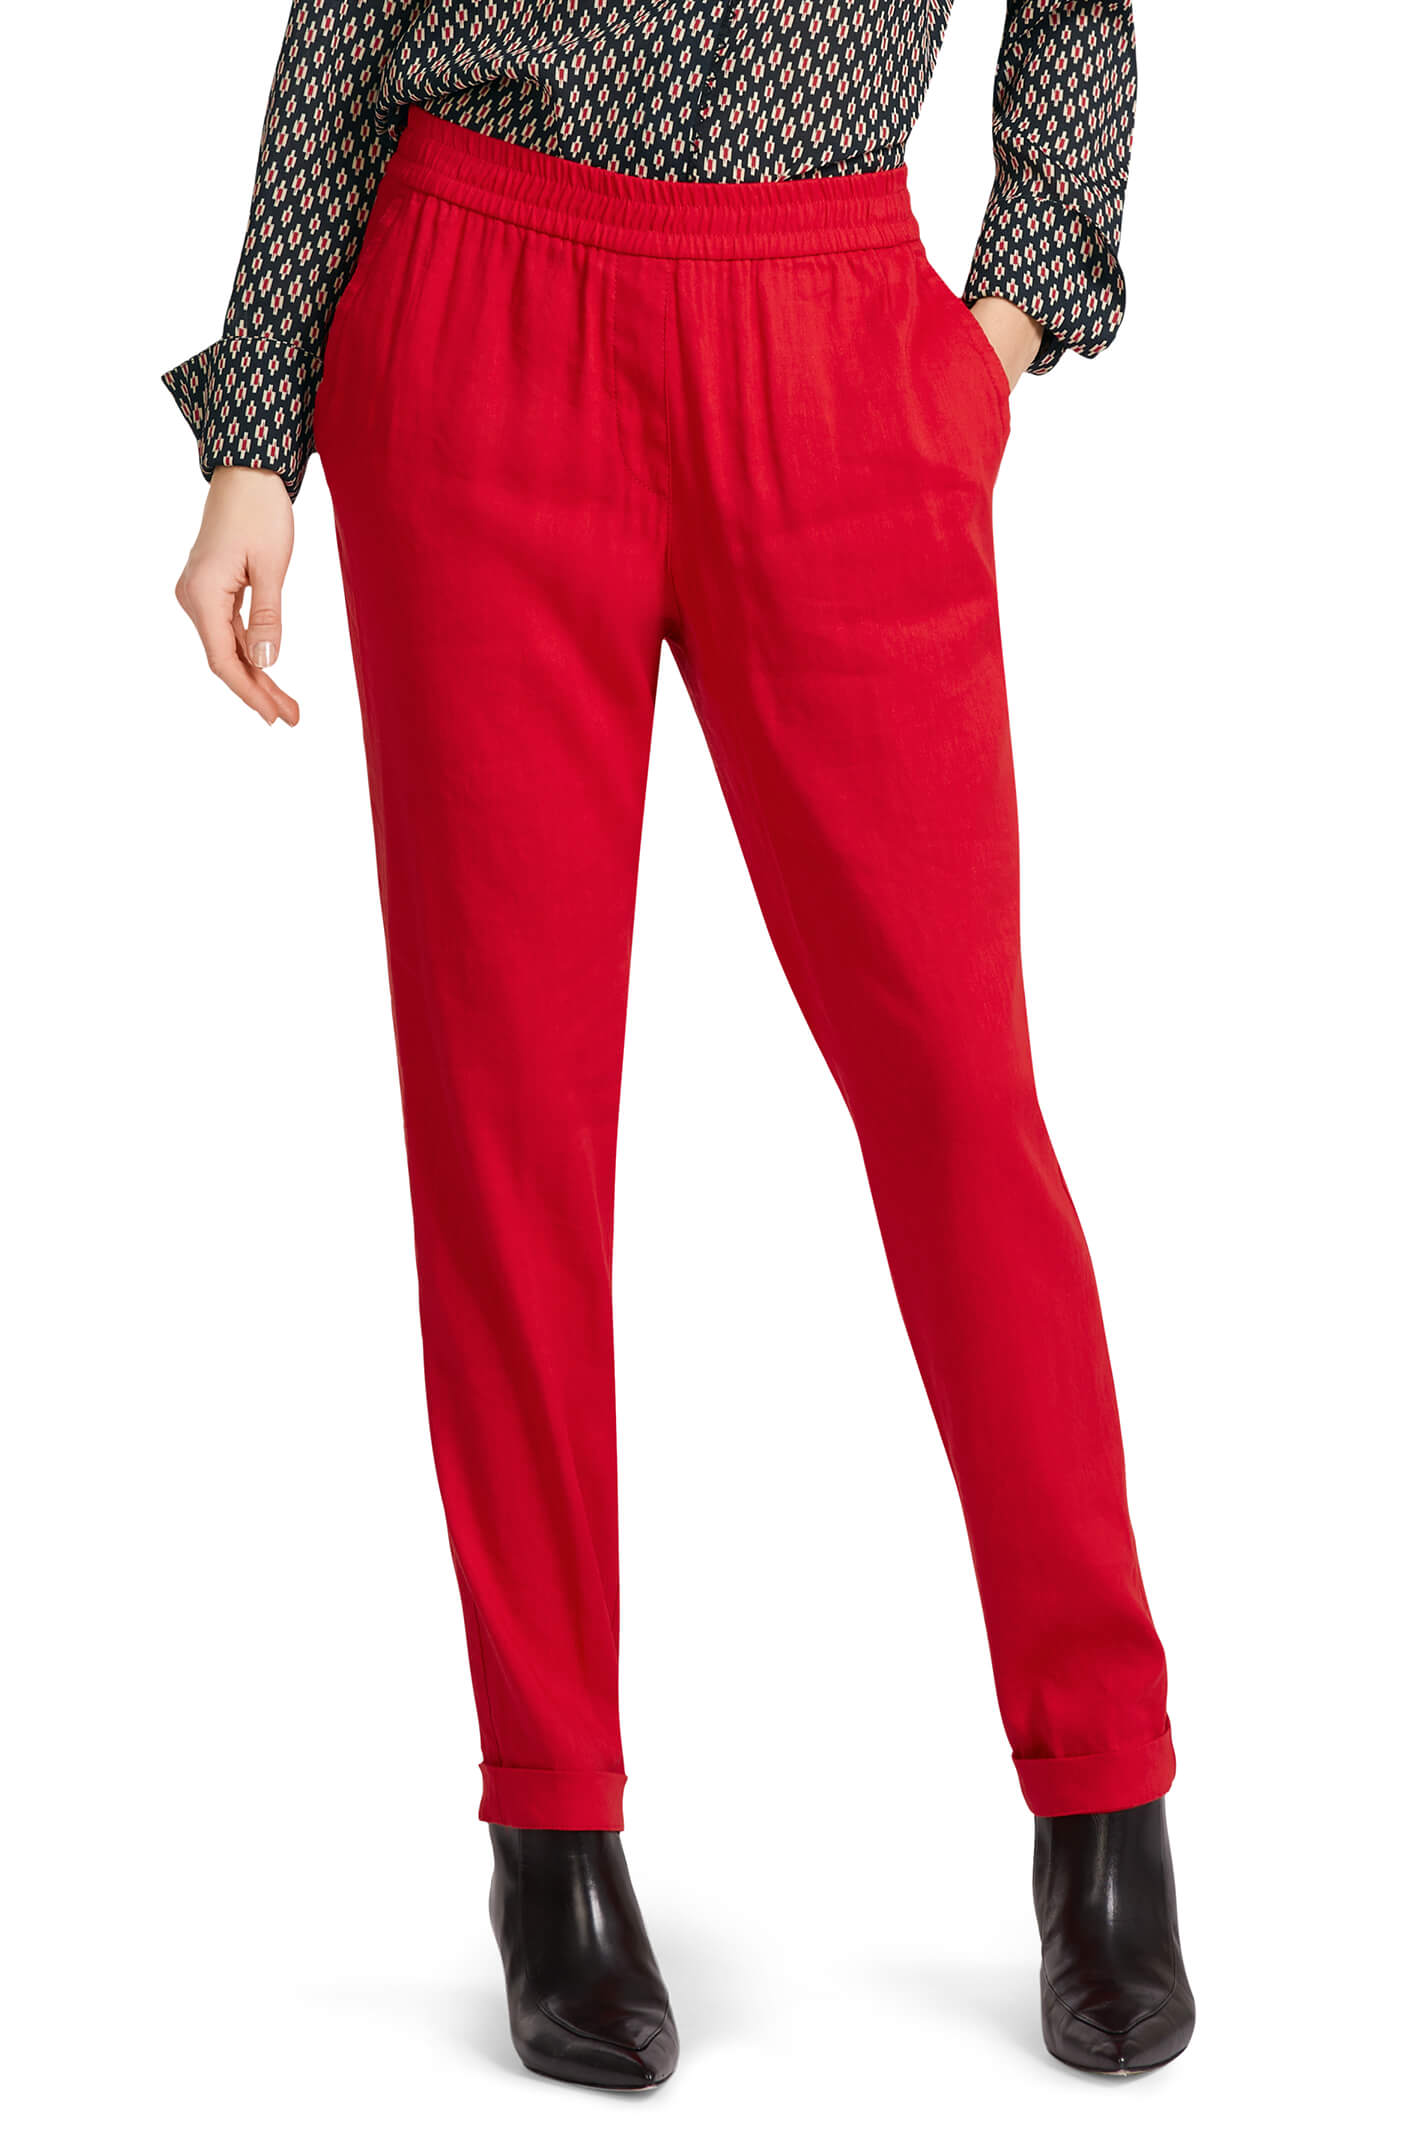 INCOTEX cotton trousers Slacks dark red  BRAUN Hamburg